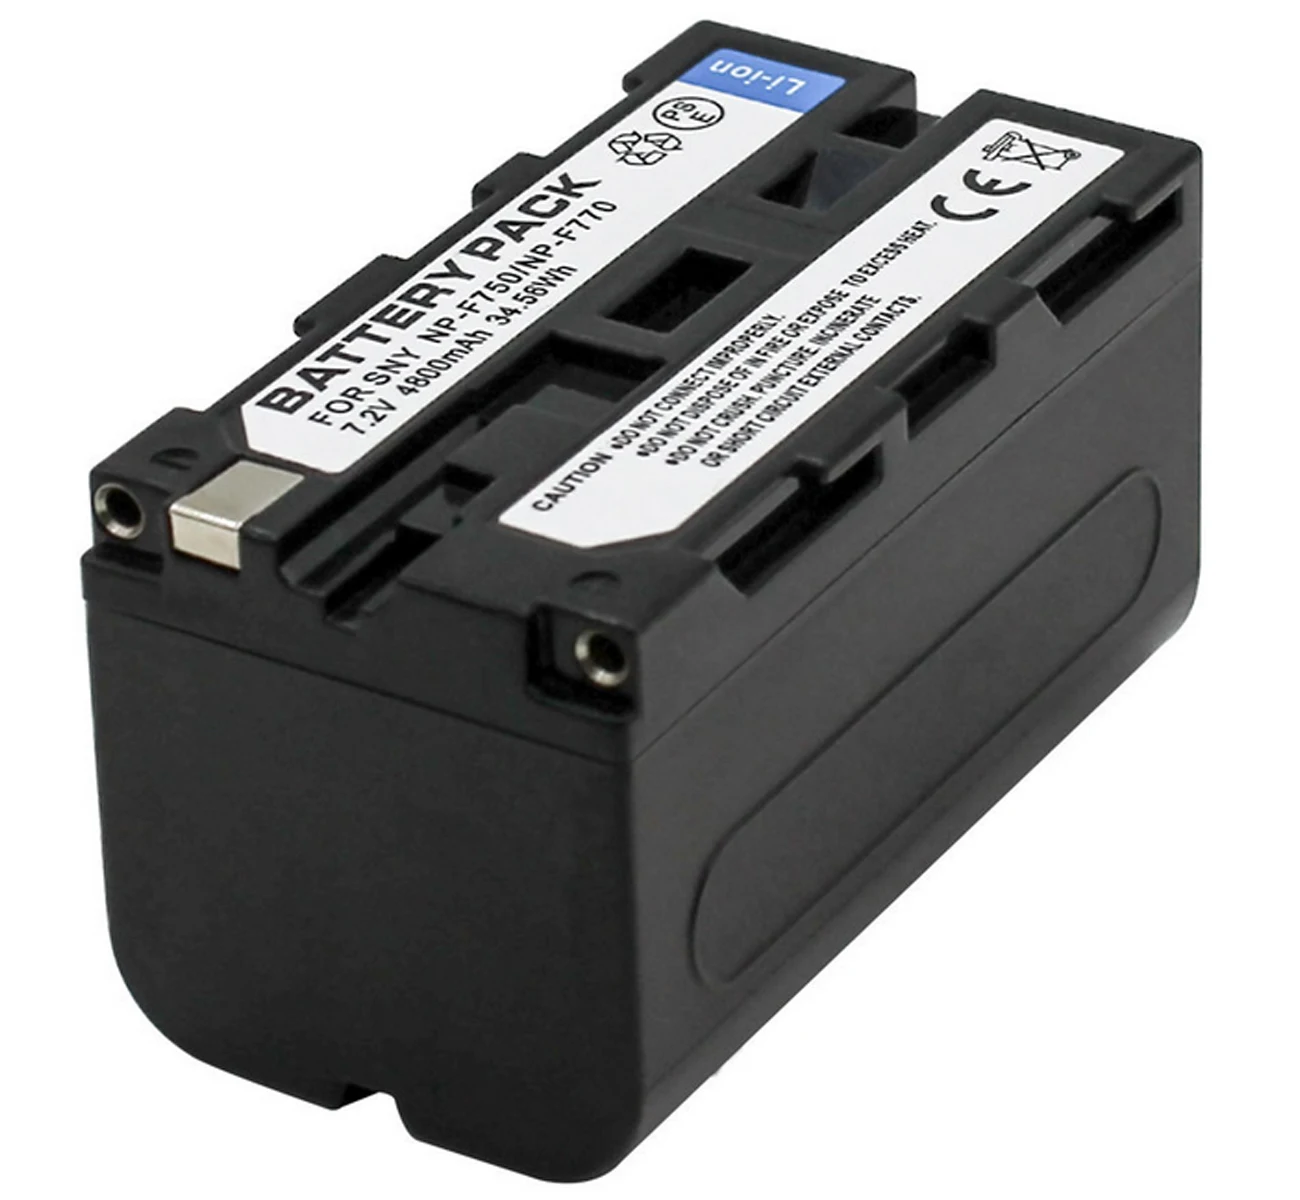 Sony NPF750 InfoLithium Camcorder Battery NP-F750 VGC 